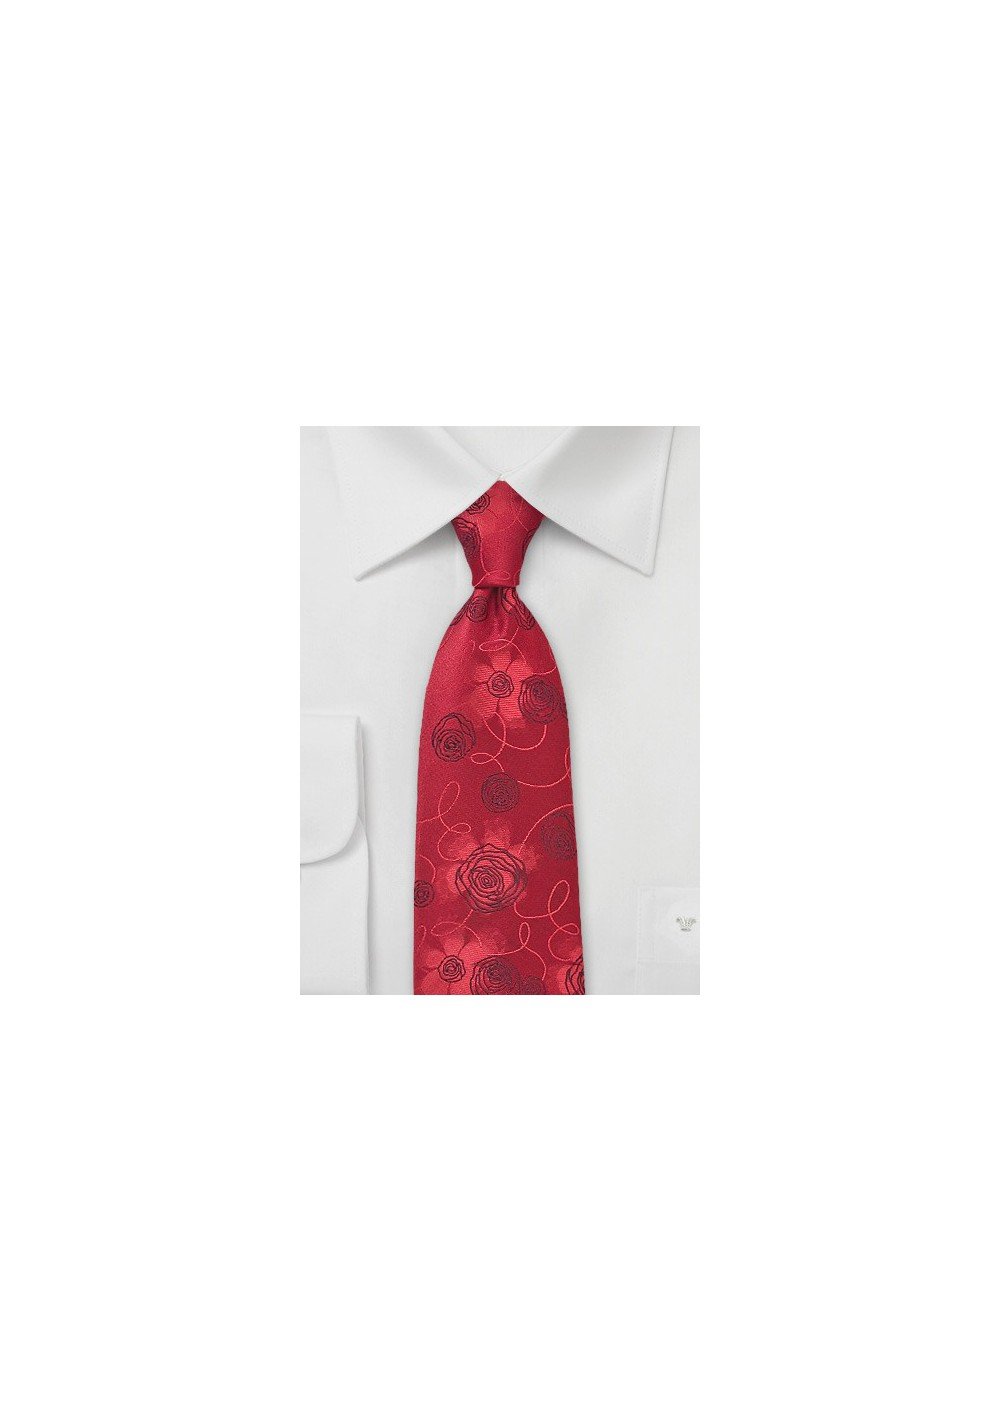 Rose Red Tie